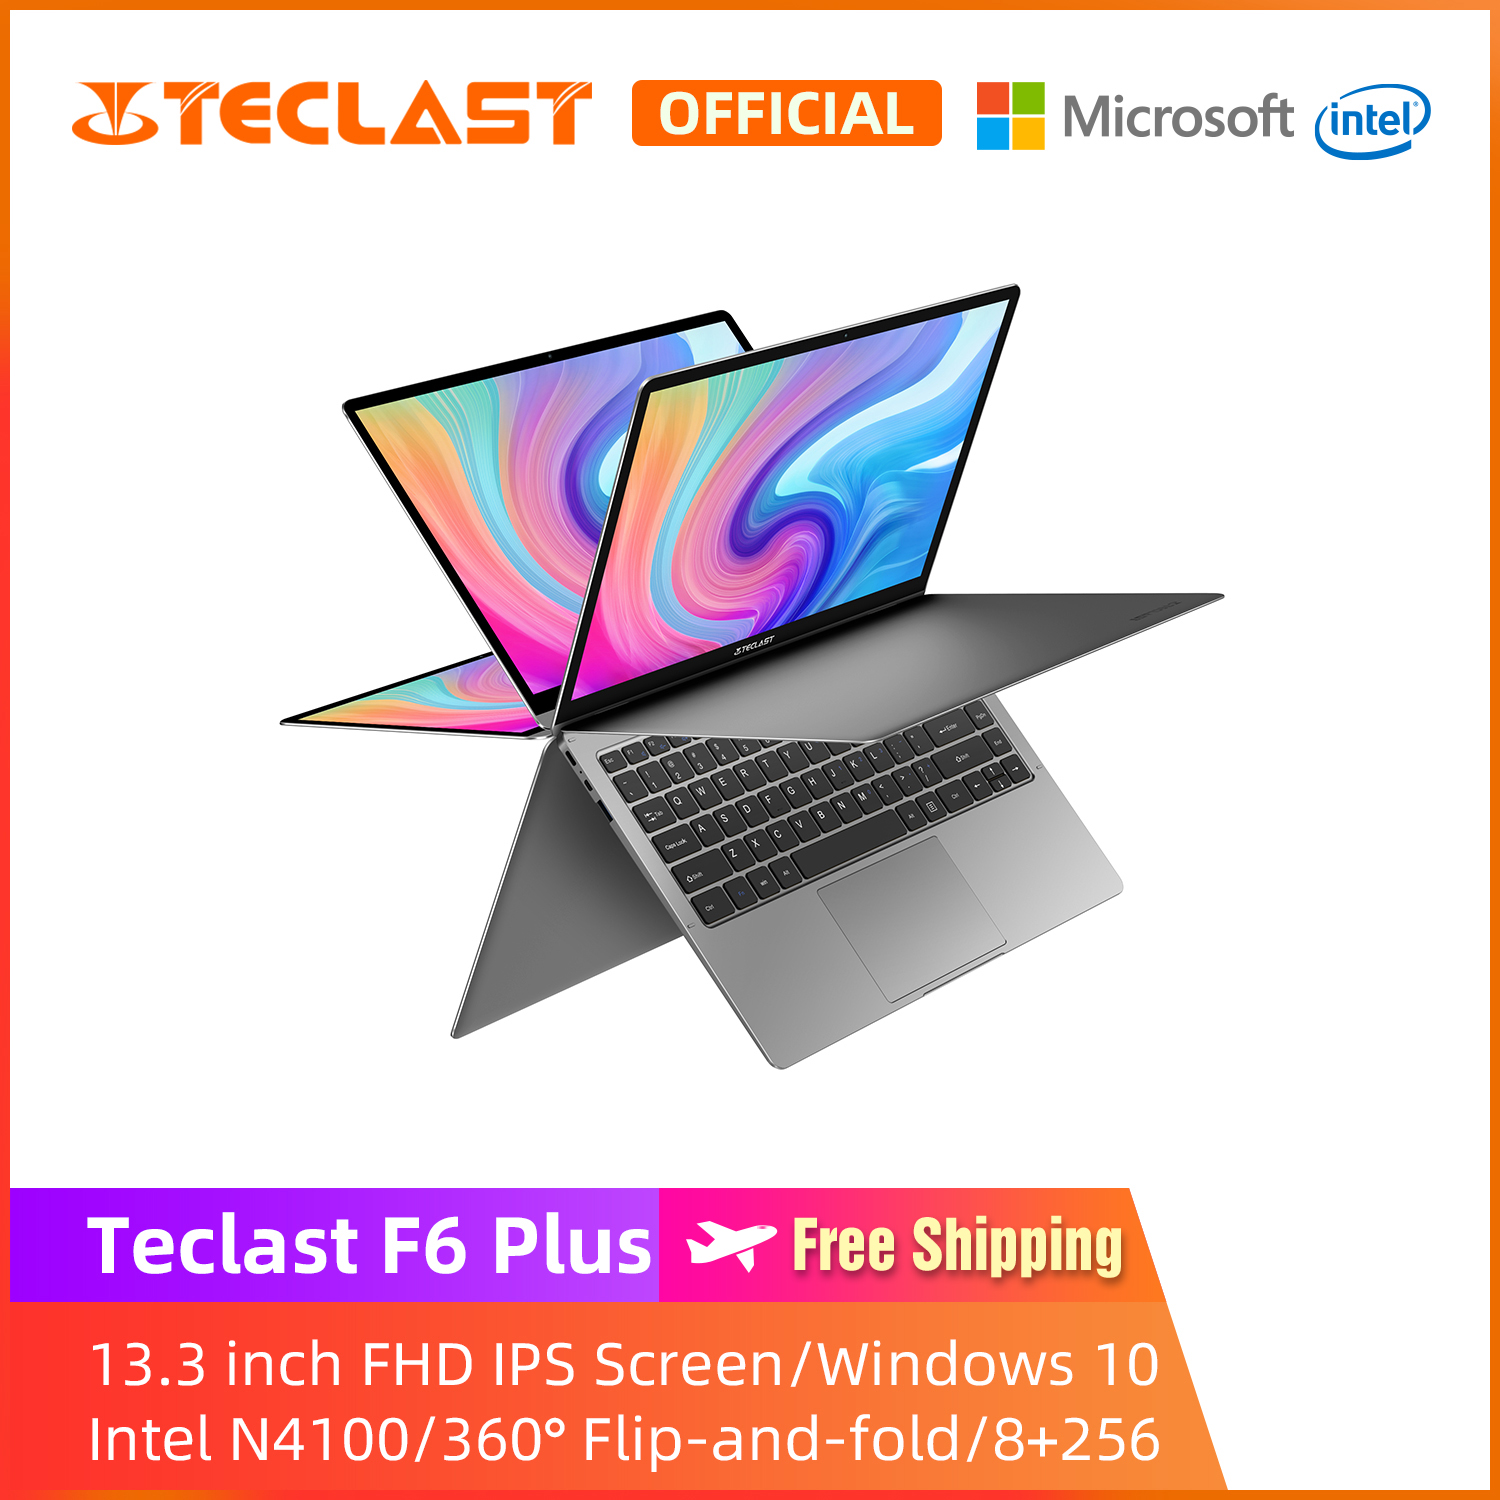 【Teclast Official】F6 Plus Laptop/13.3  inch/ 360° Flip-and-fold Design/FHD IPS Touch Screen/Intel Gemini Lake N4100 CPU/Windows 10/8GB+256GB SSD